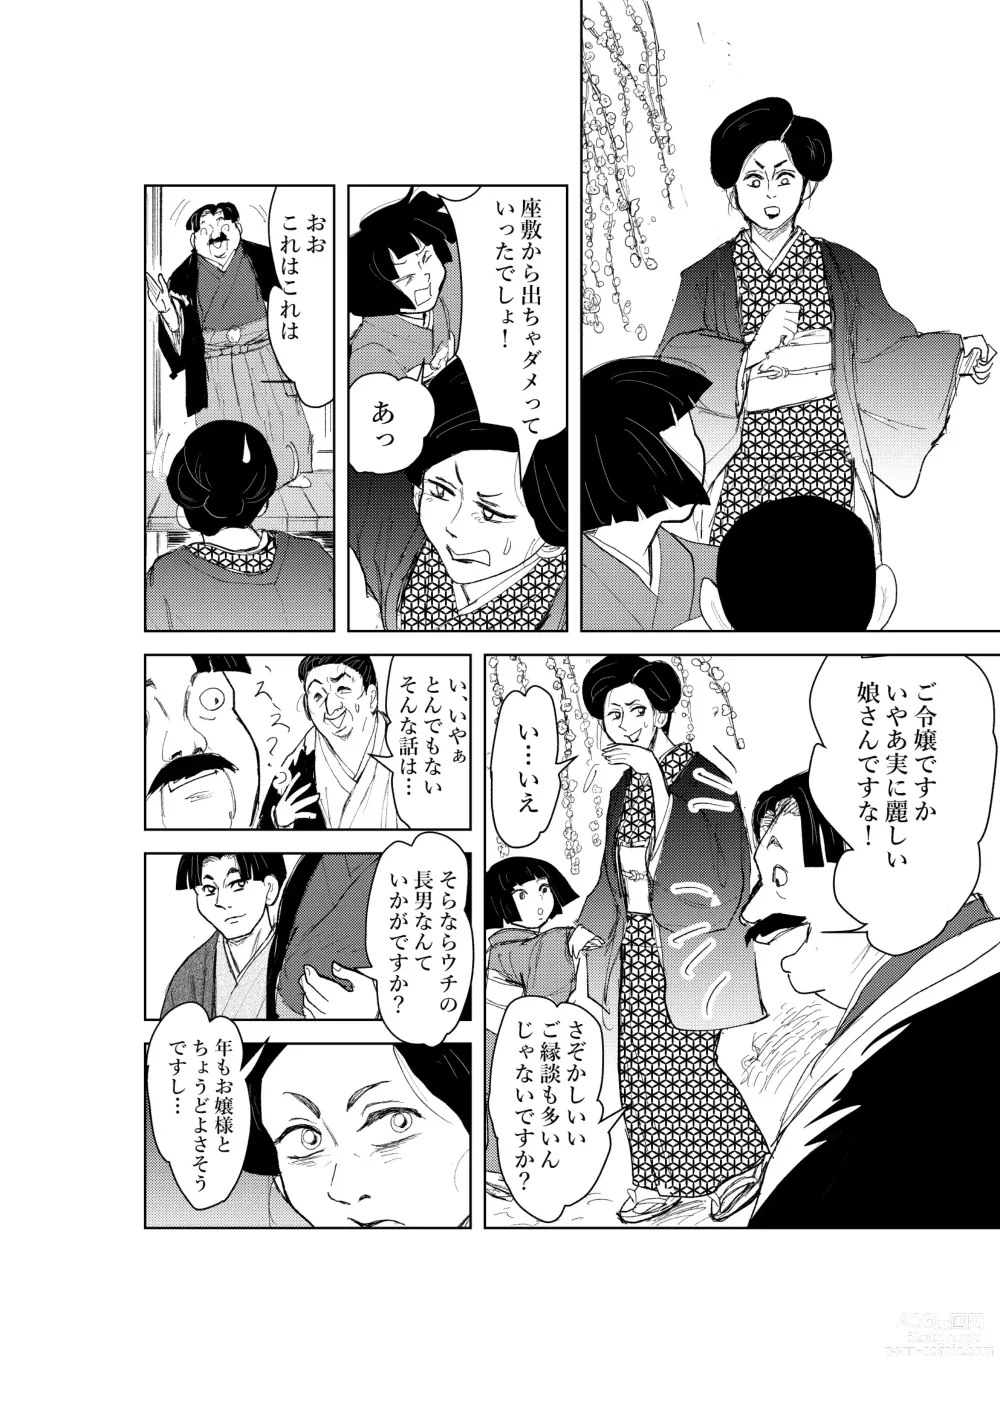 Page 14 of doujinshi Zashikiwarashi